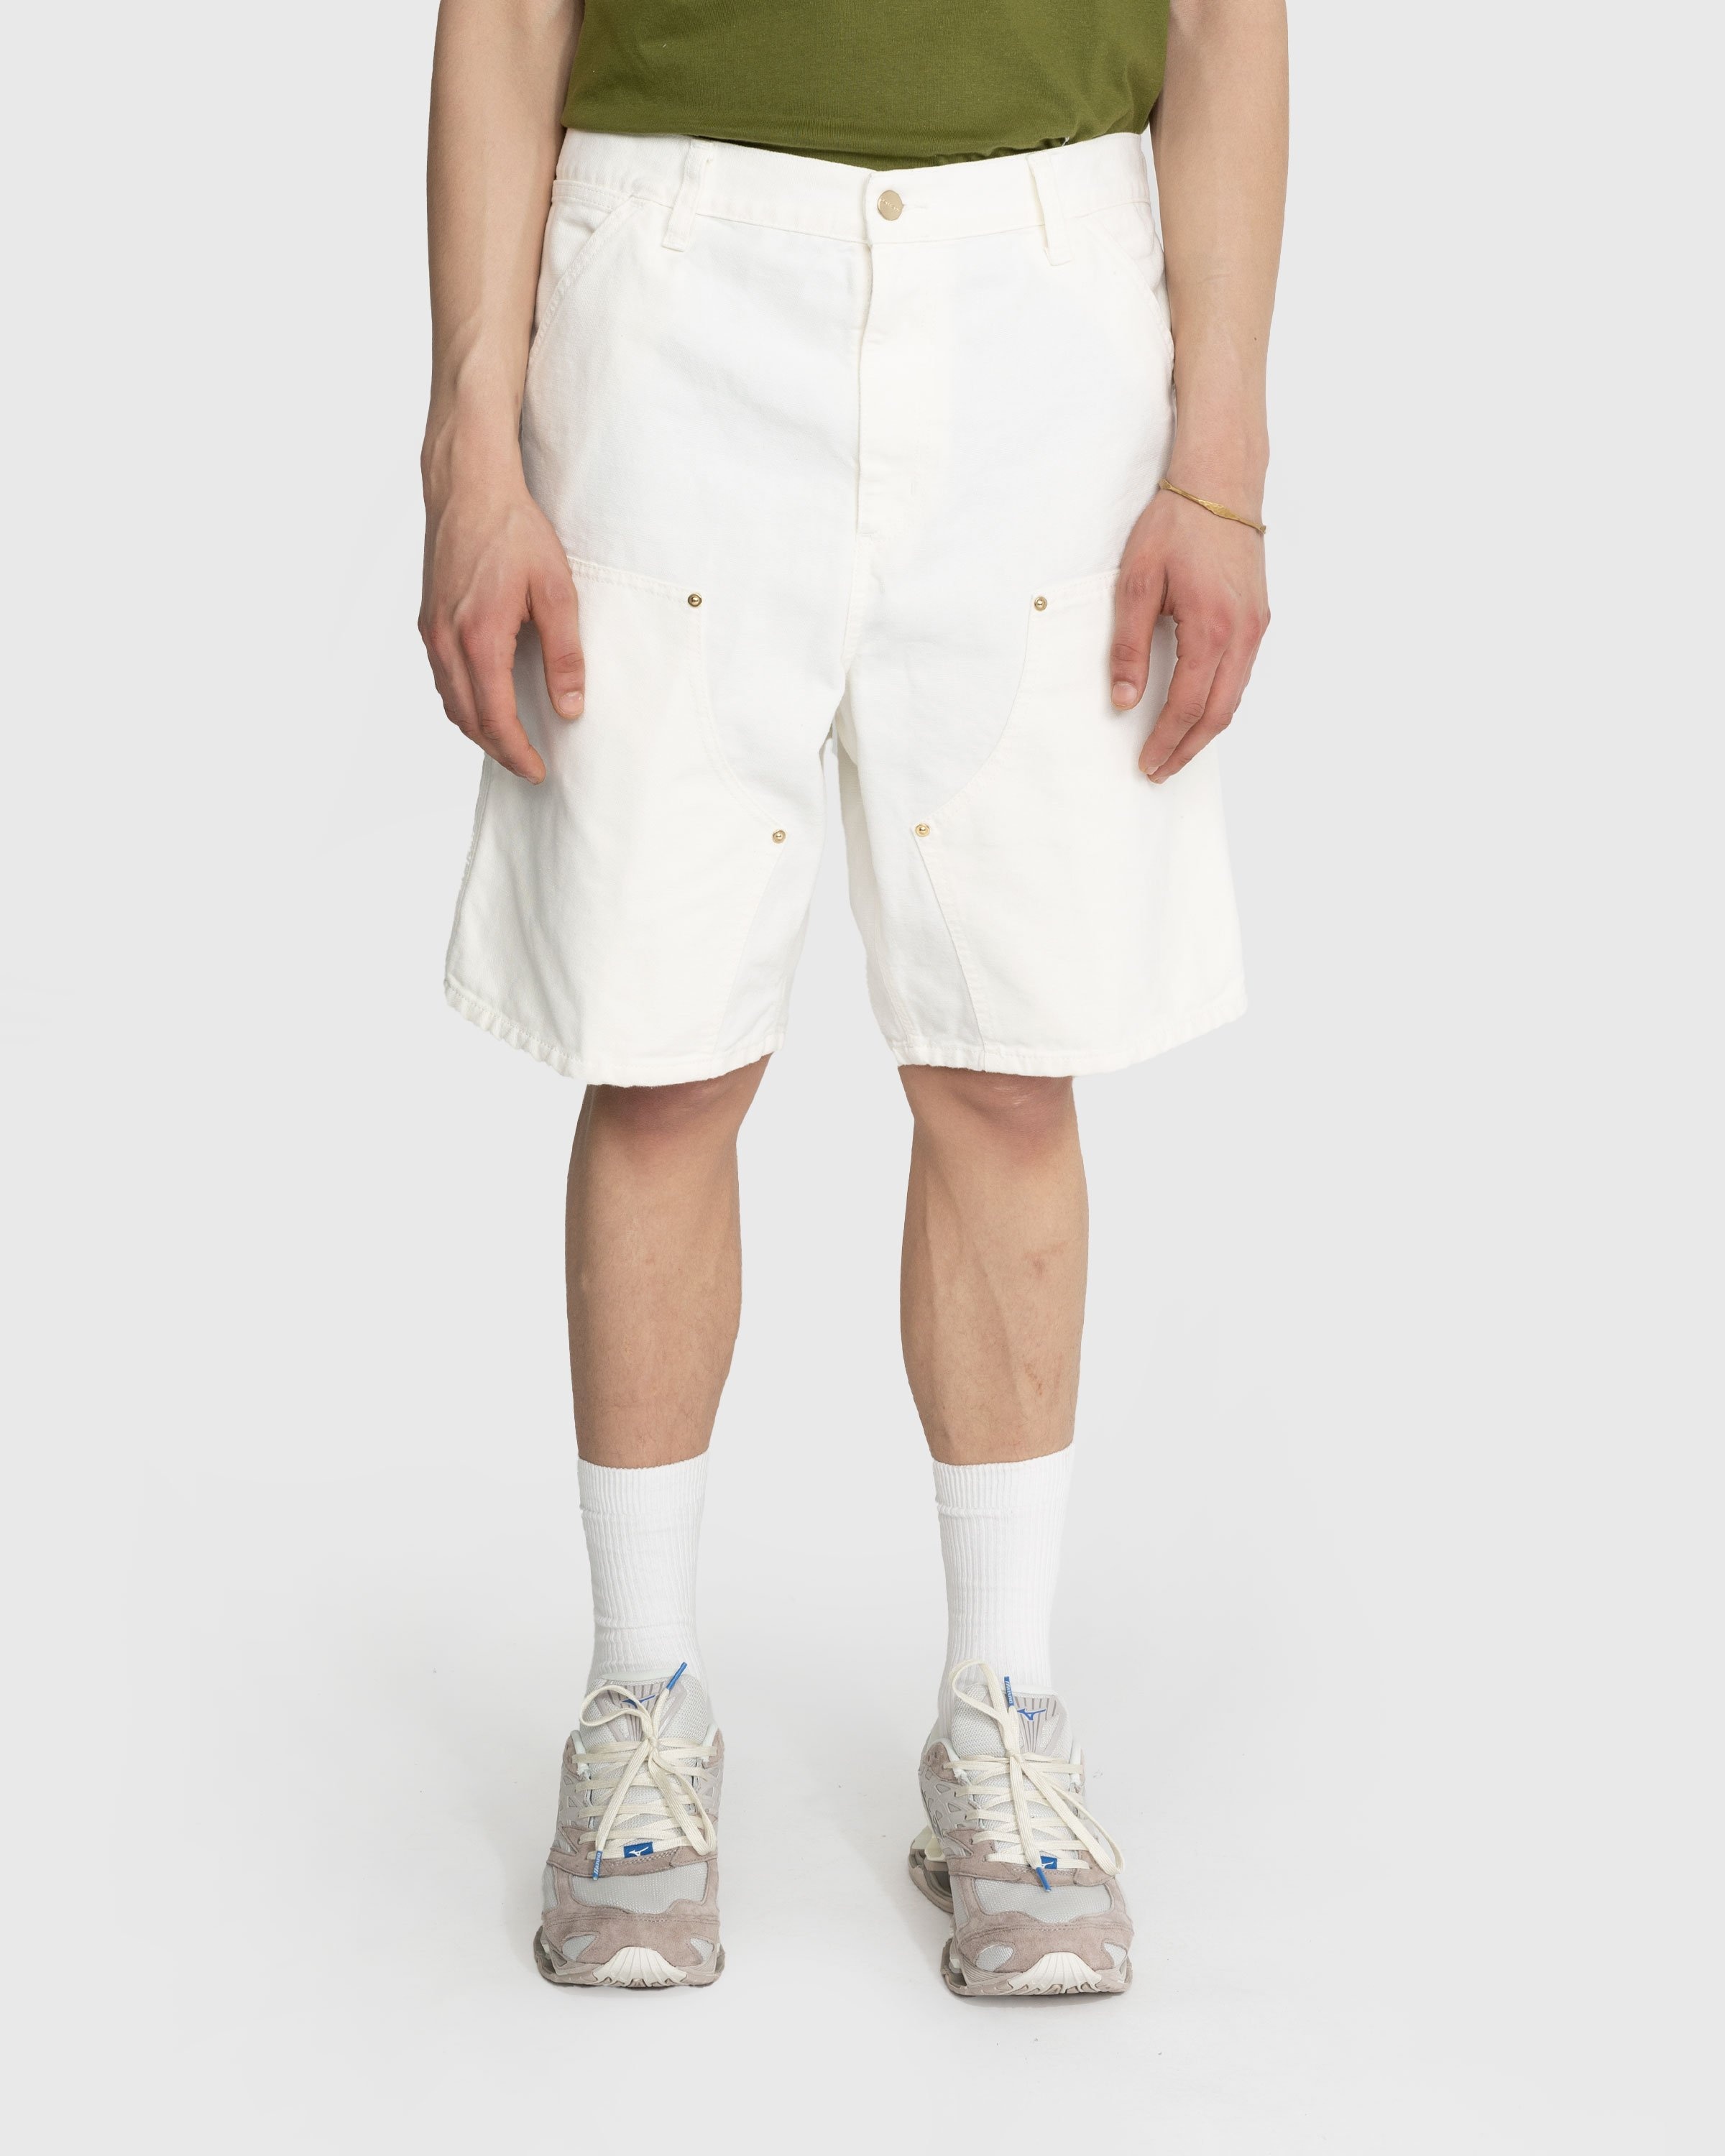 Carhartt WIP – Double Knee Short White - Shorts - Beige - Image 2